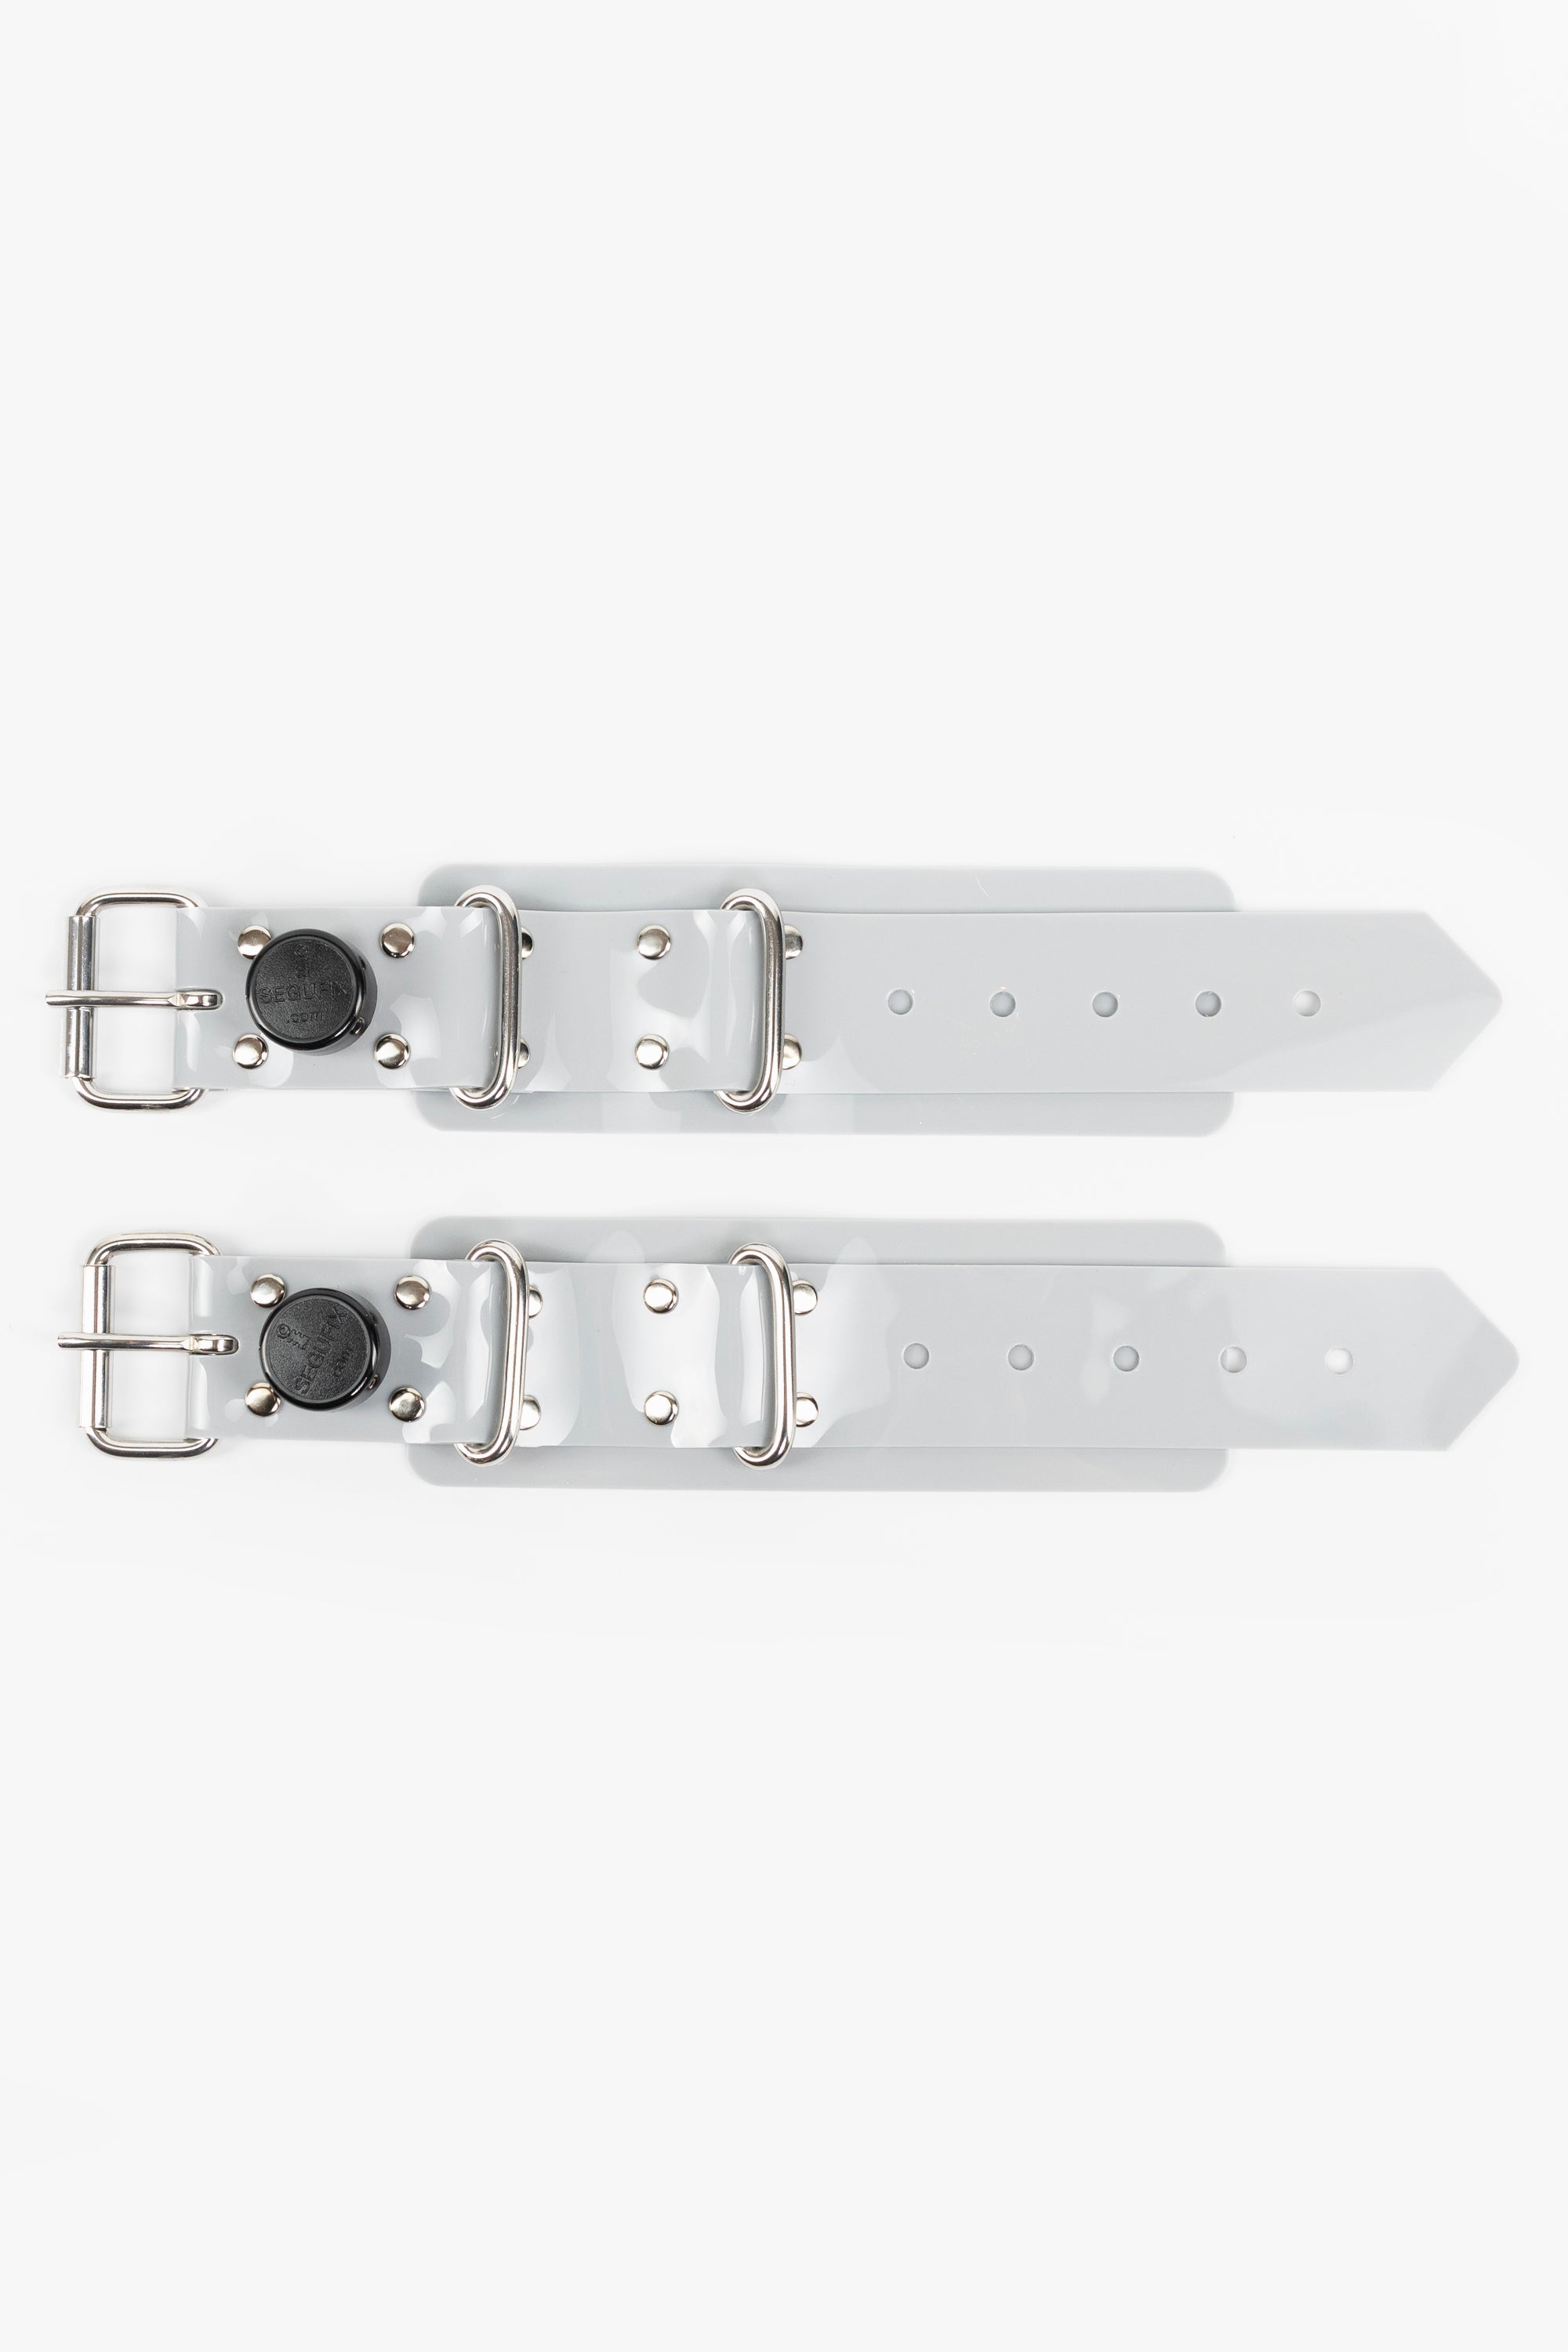 Lockable segufix wrist cuffs, light grey/chrome